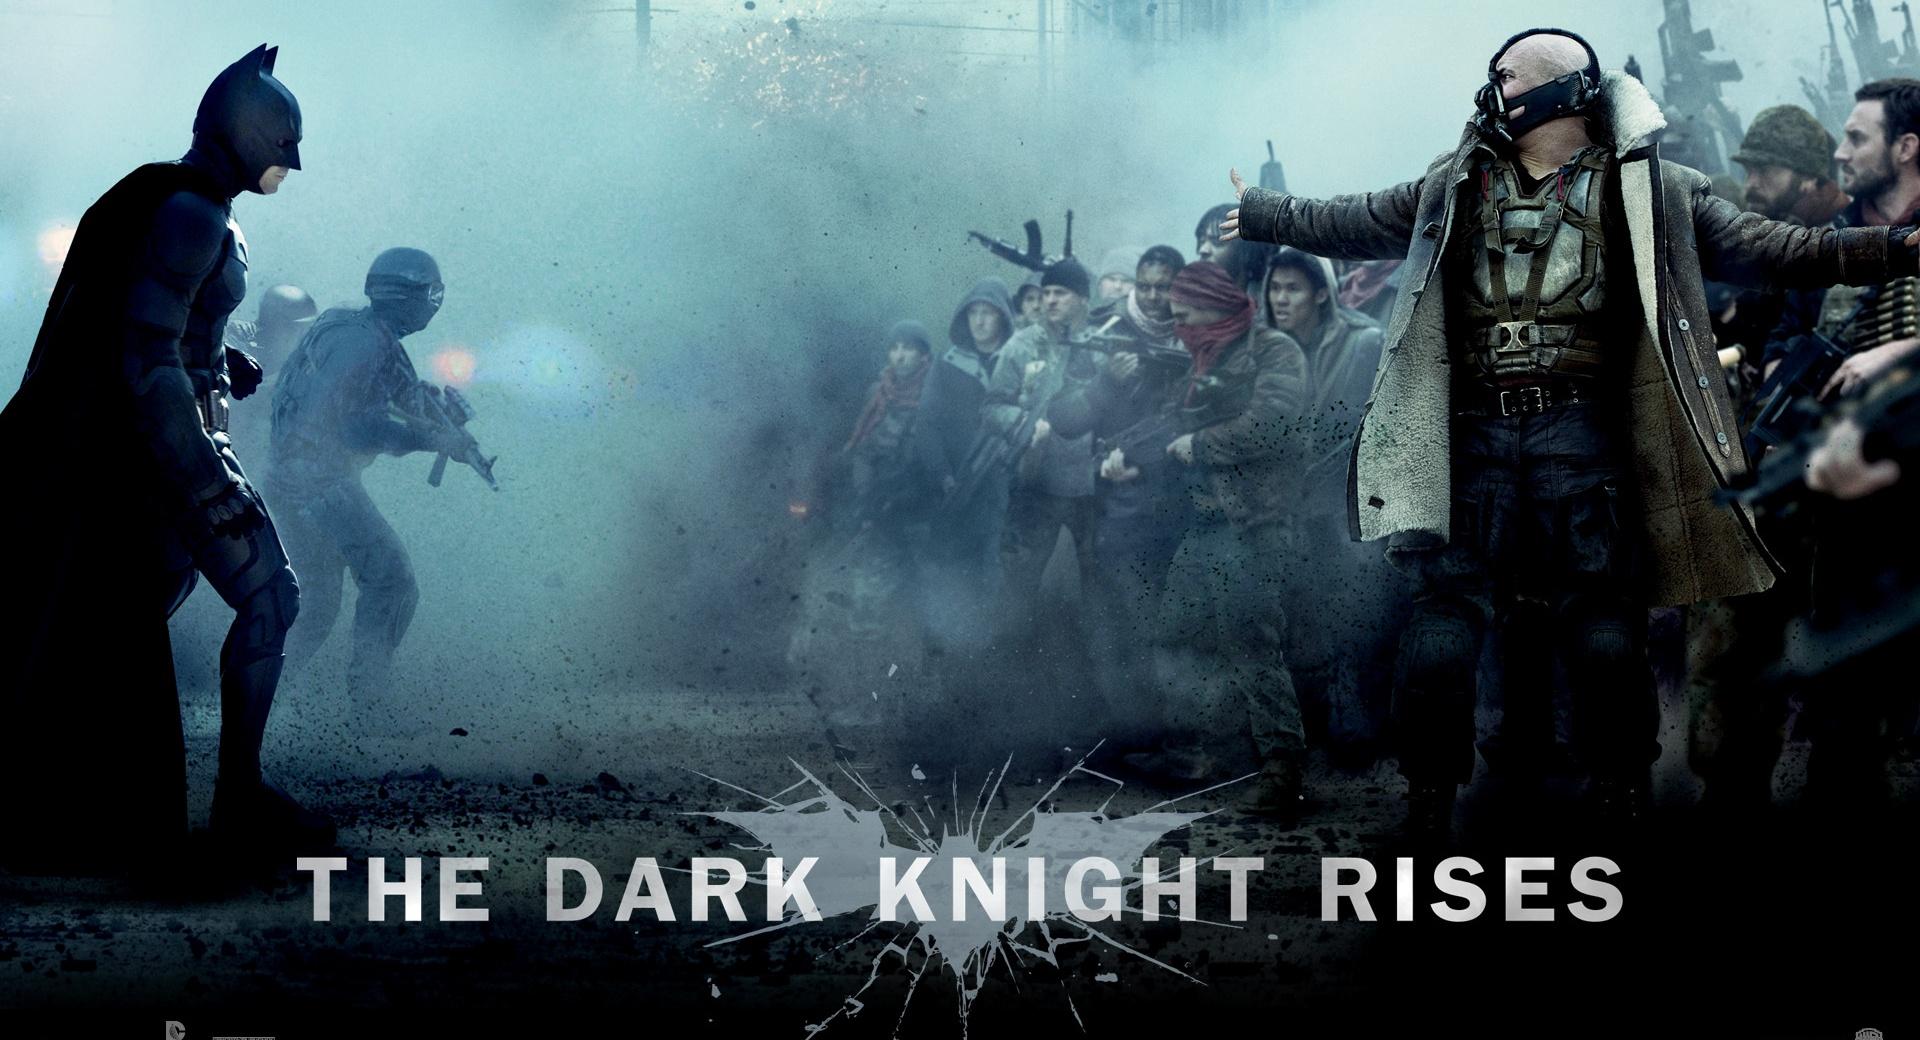 The Dark Knight Rises Bane Vs Batman at 1600 x 1200 size wallpapers HD quality